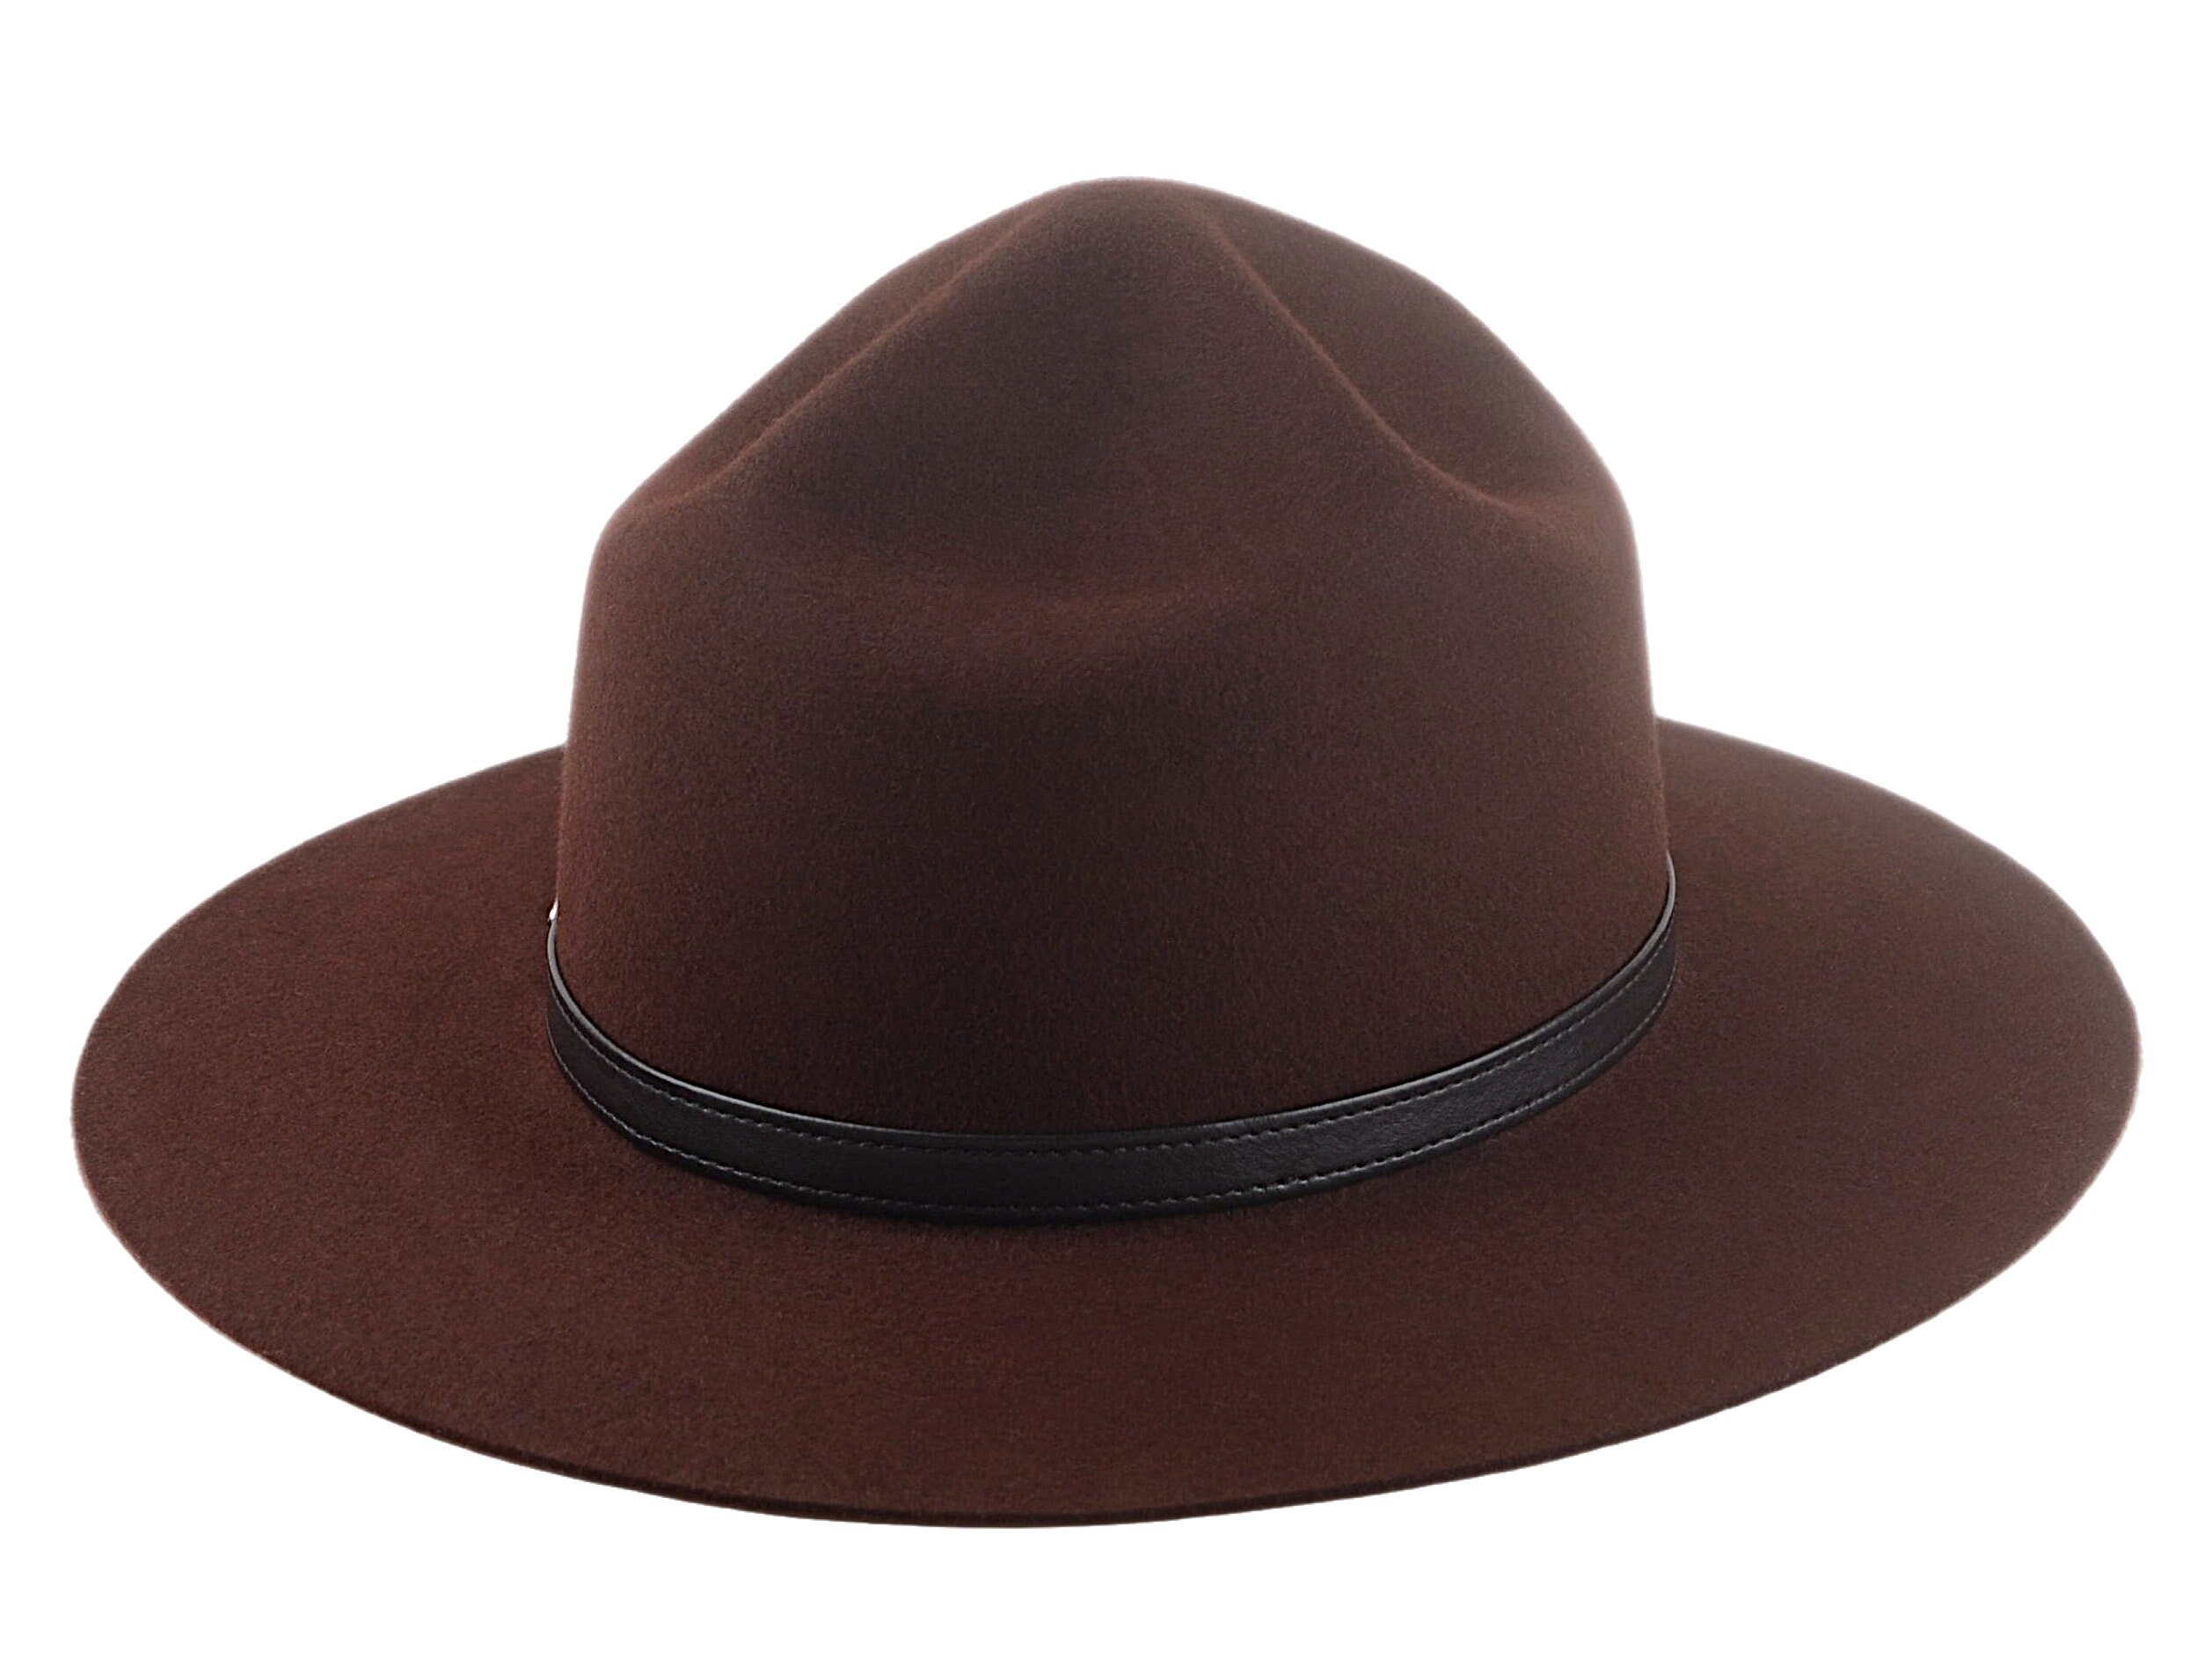 Campaign Hat | The Lemon Squeezer | Oxblood Fur Felt Wide Brim Hat Men Women | Western Hats